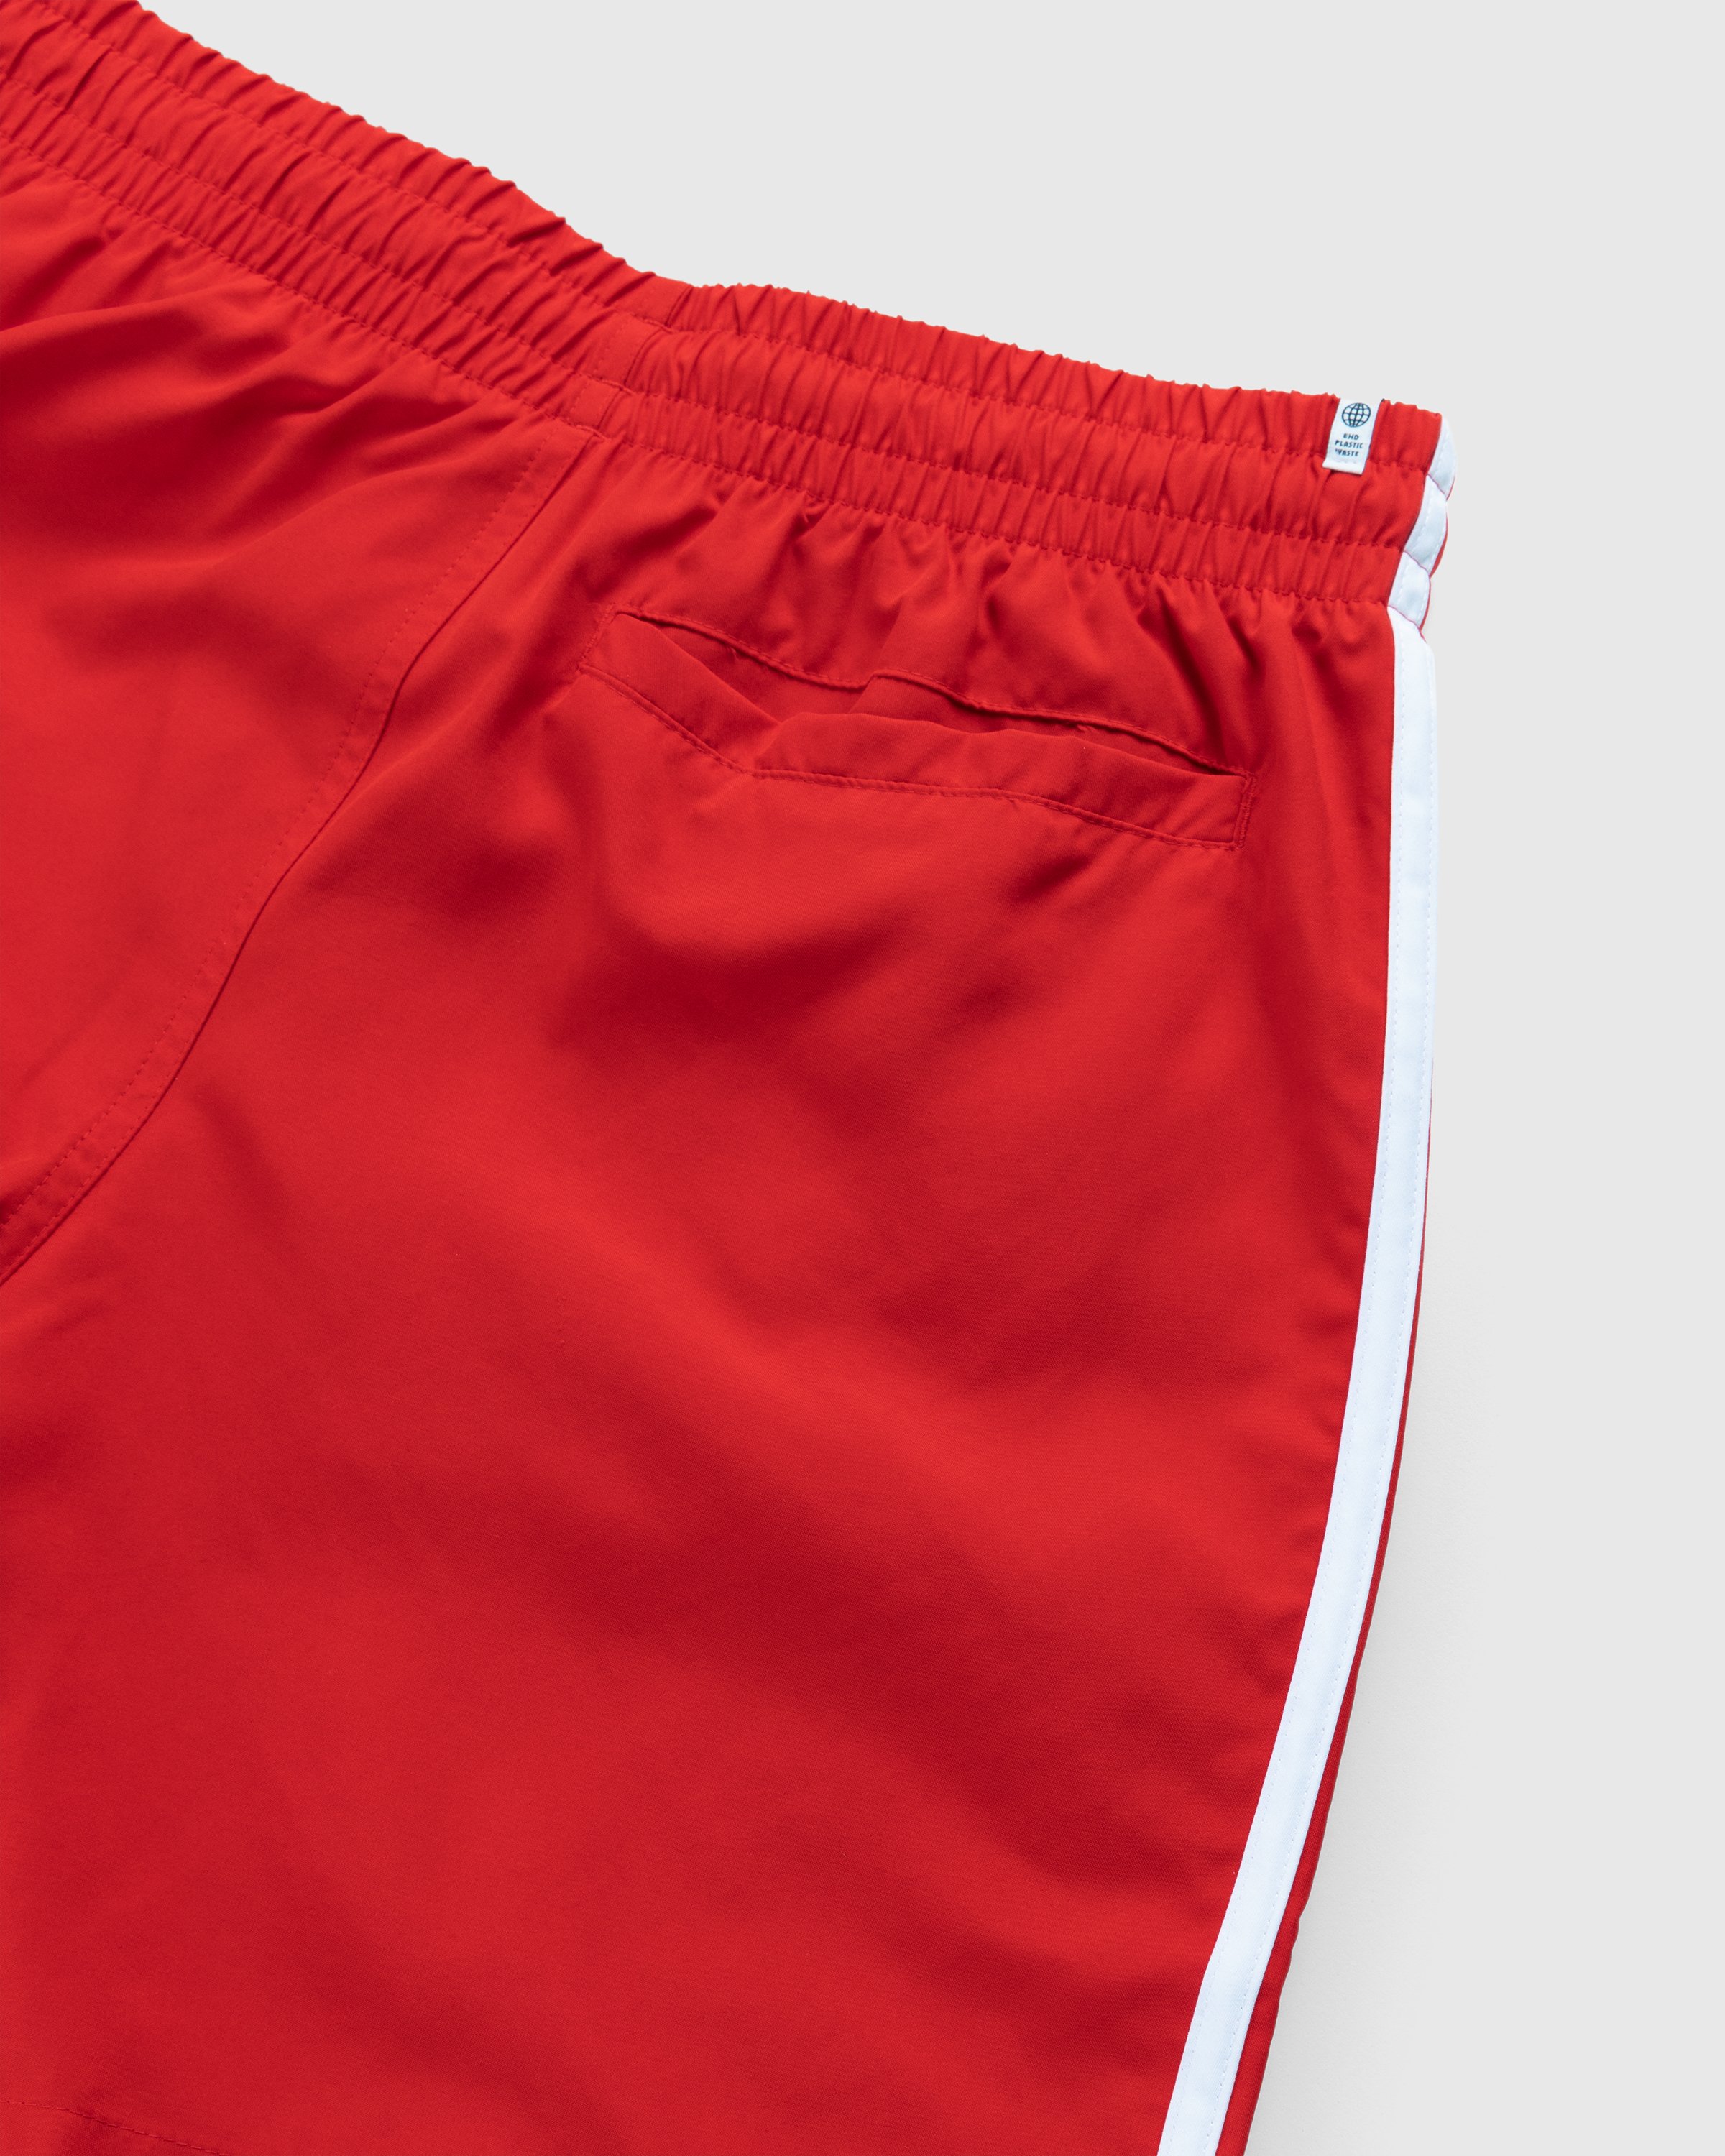 Adidas - Classic 3-Stripes Swim Shorts Vivid Red - Clothing - Red - Image 4